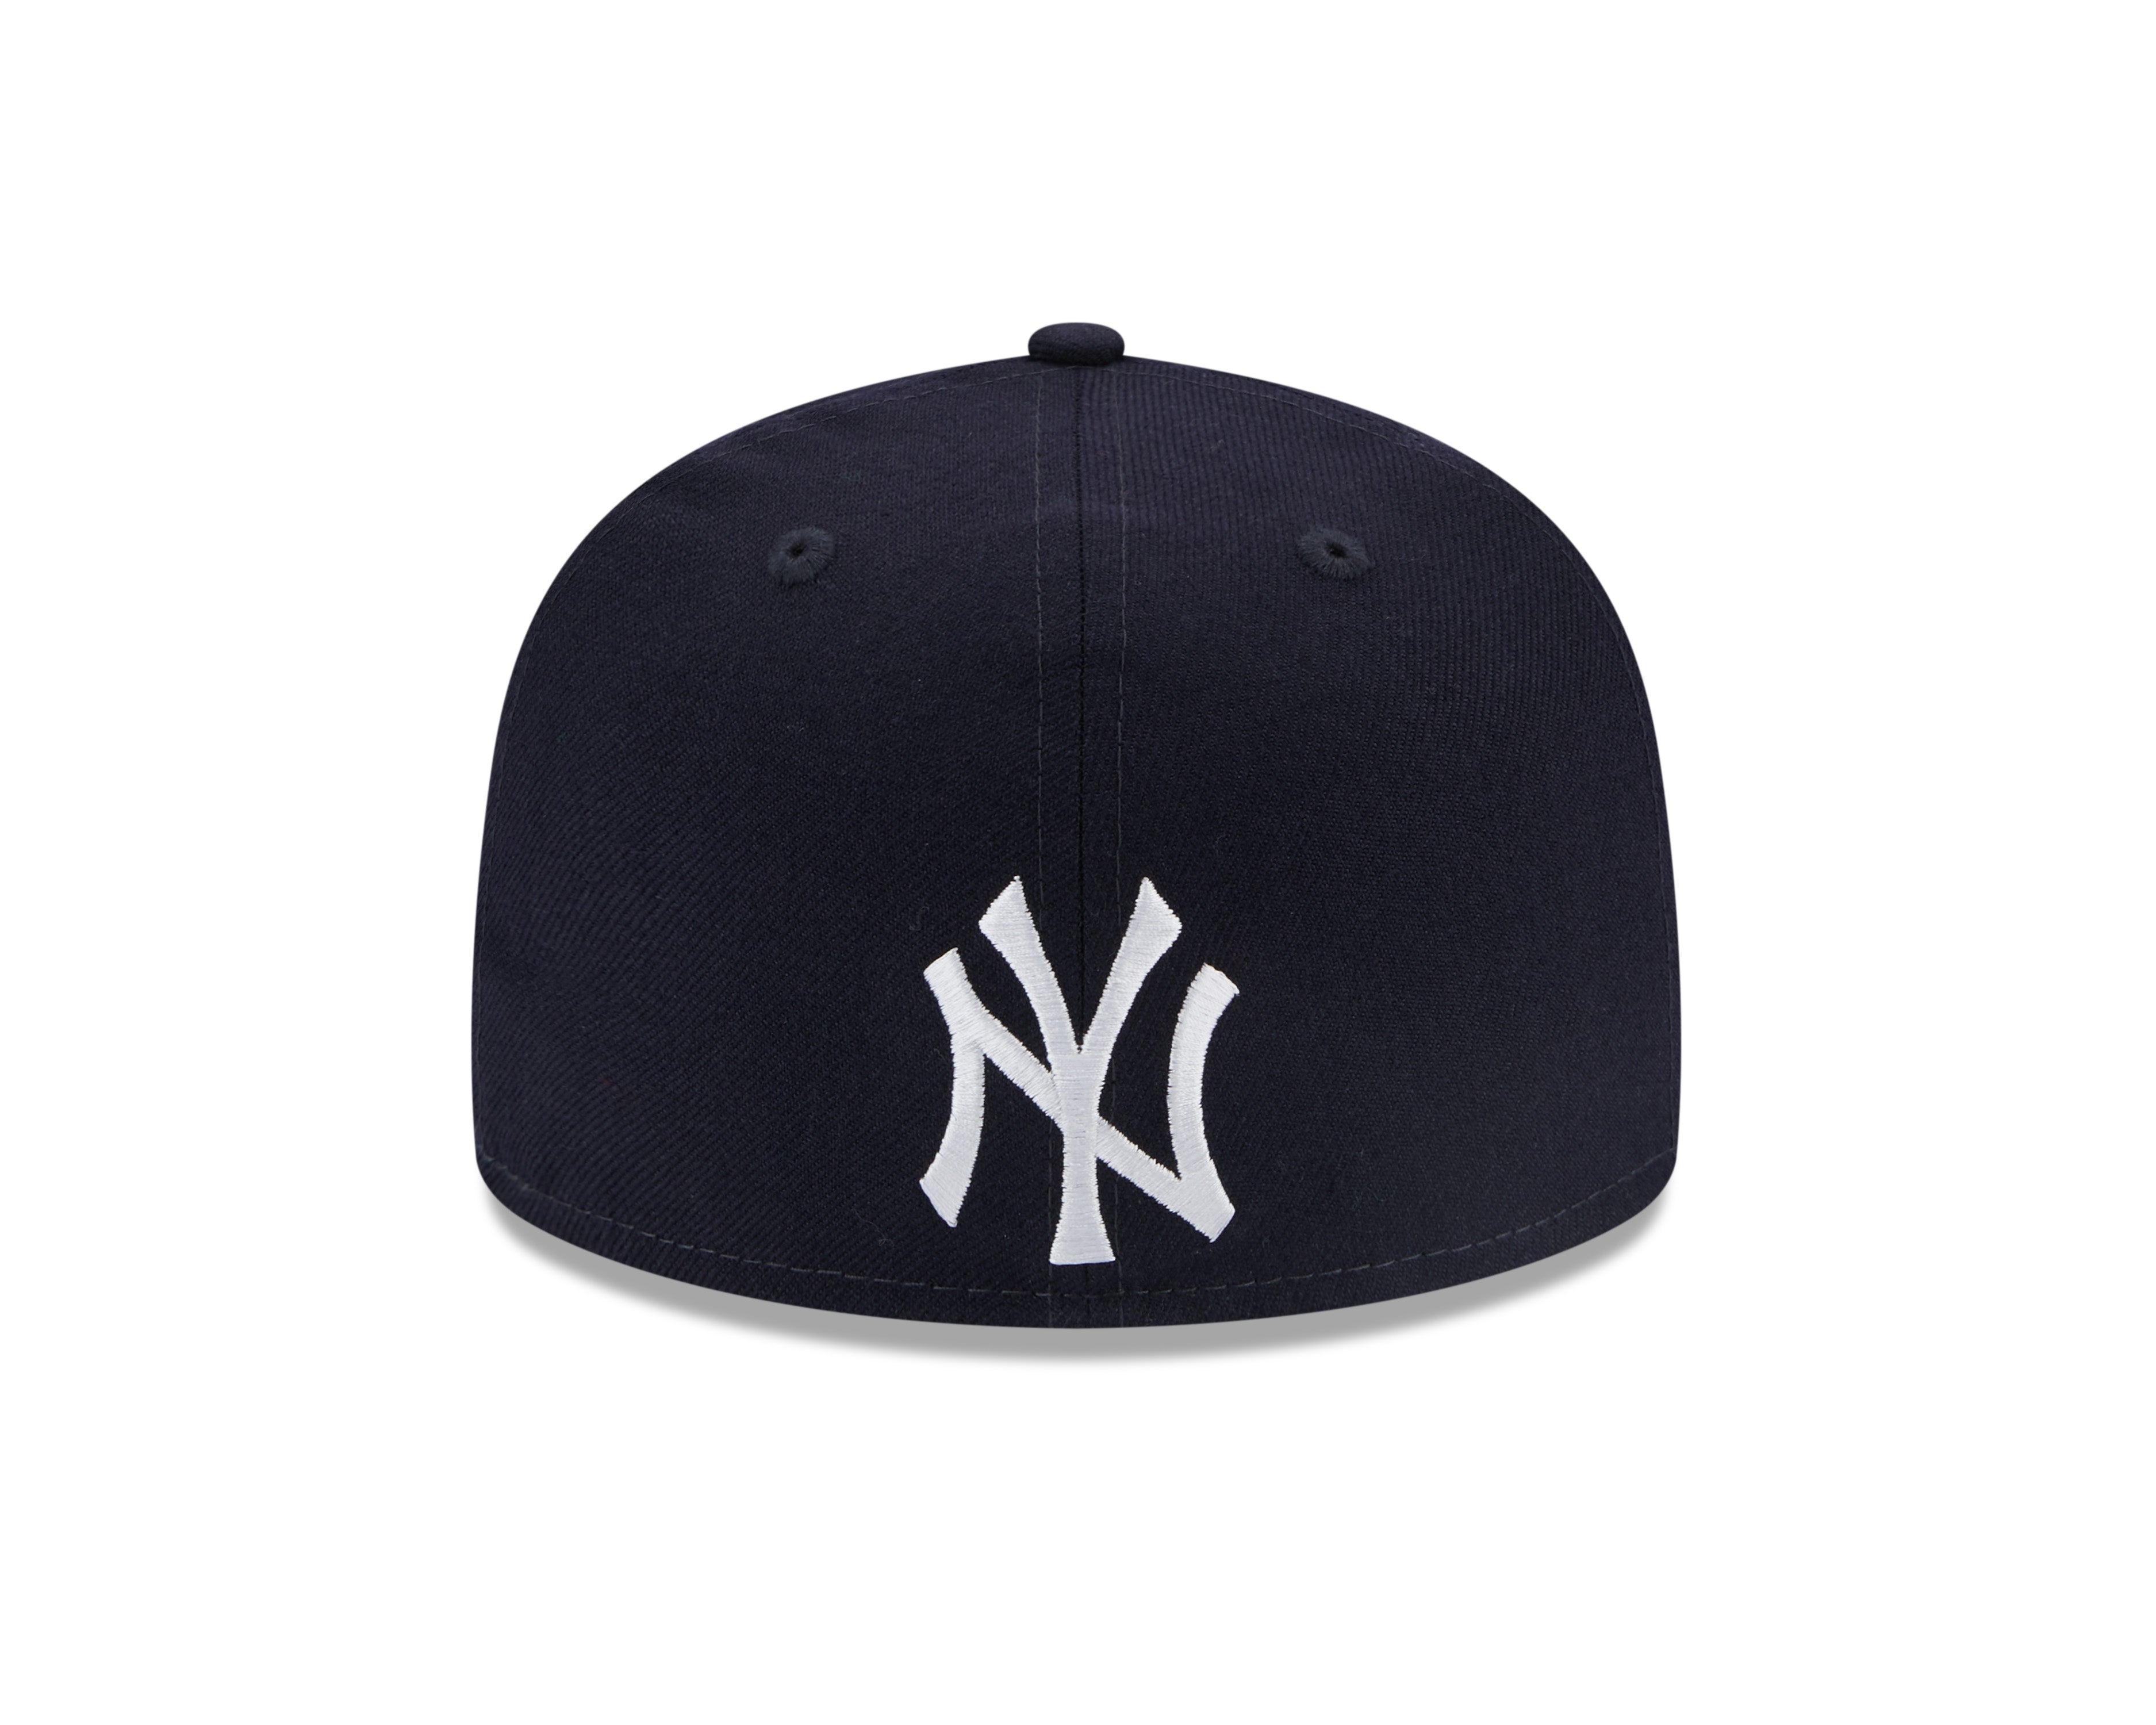 NEW ERA 59FIFTY MLB NEW YORK YANKEES REVERSE LOGO WORLD SERIES 1996 NAVY / GREY UV FITTED CAP